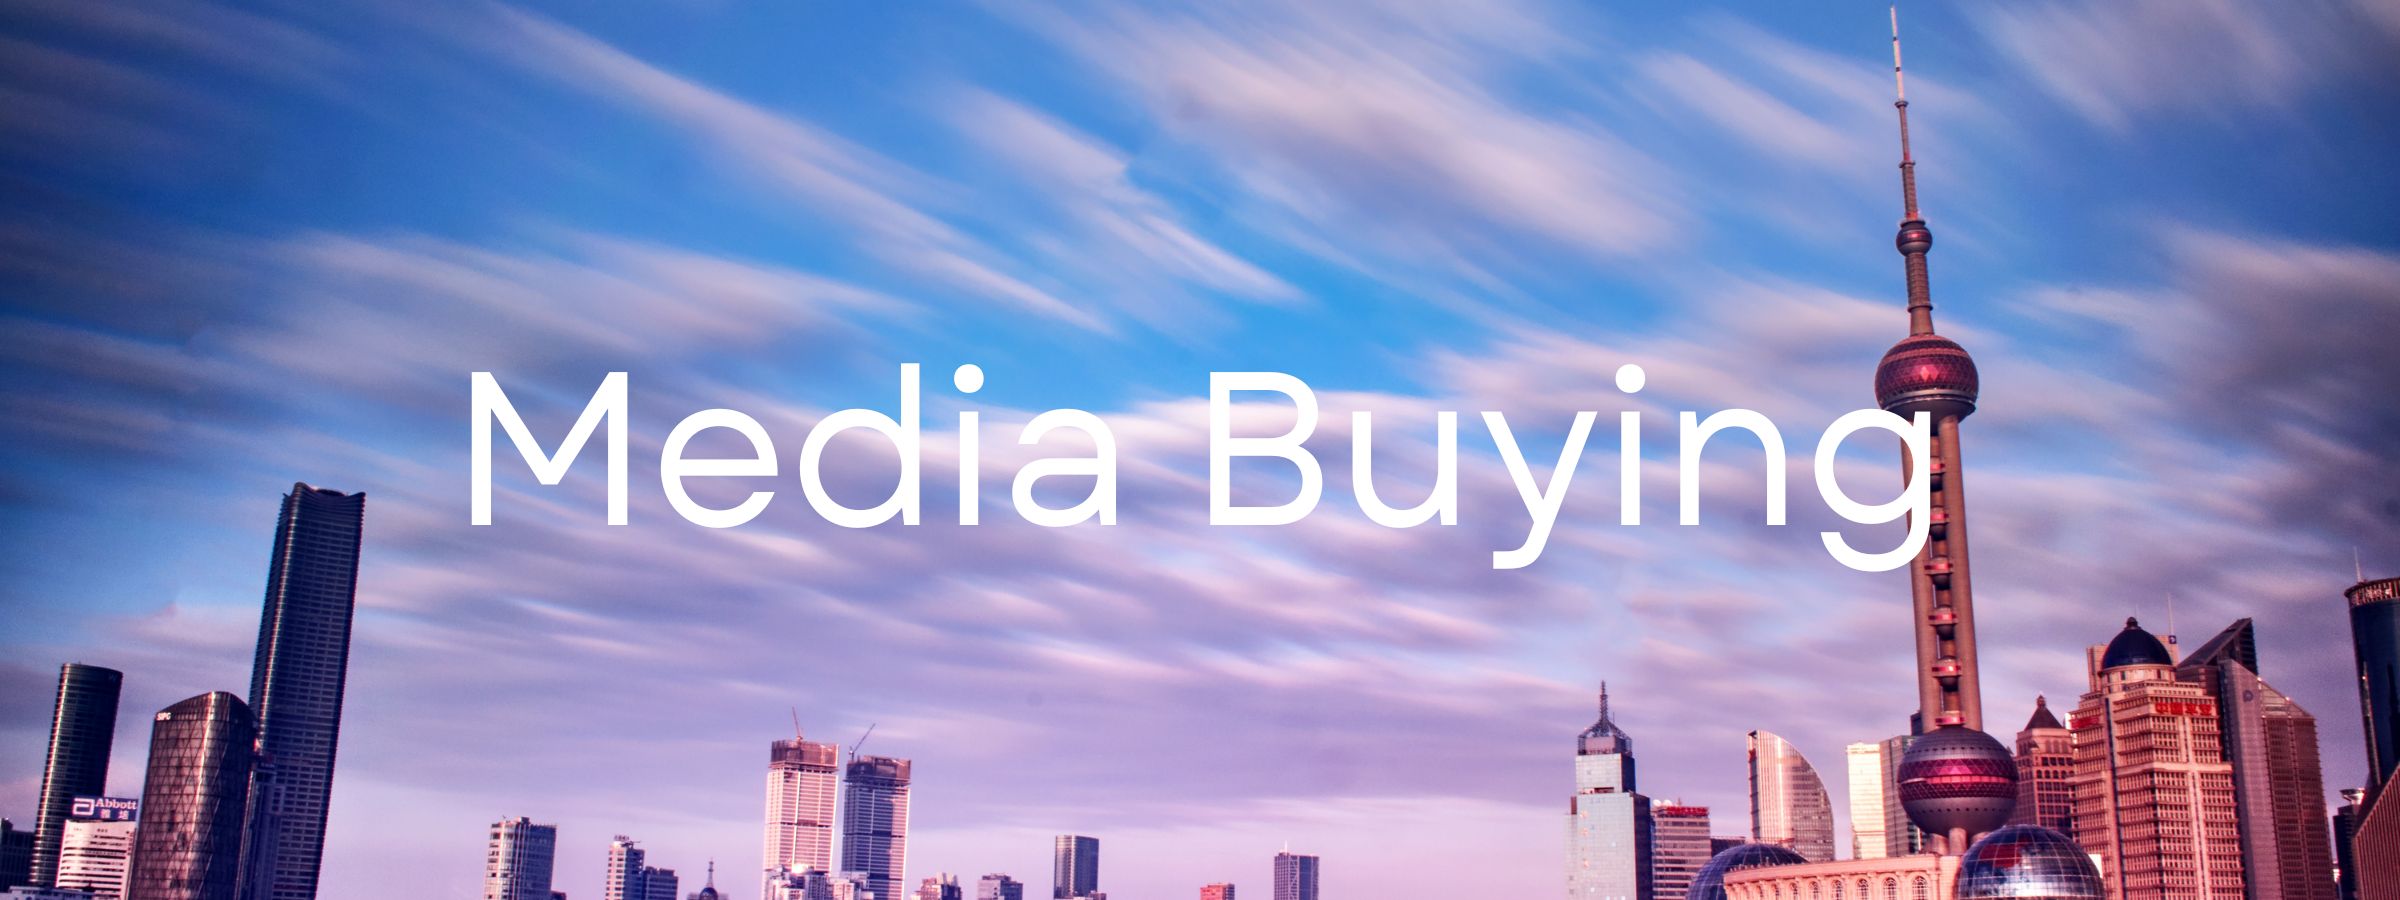  Media Buying & Planning Agency